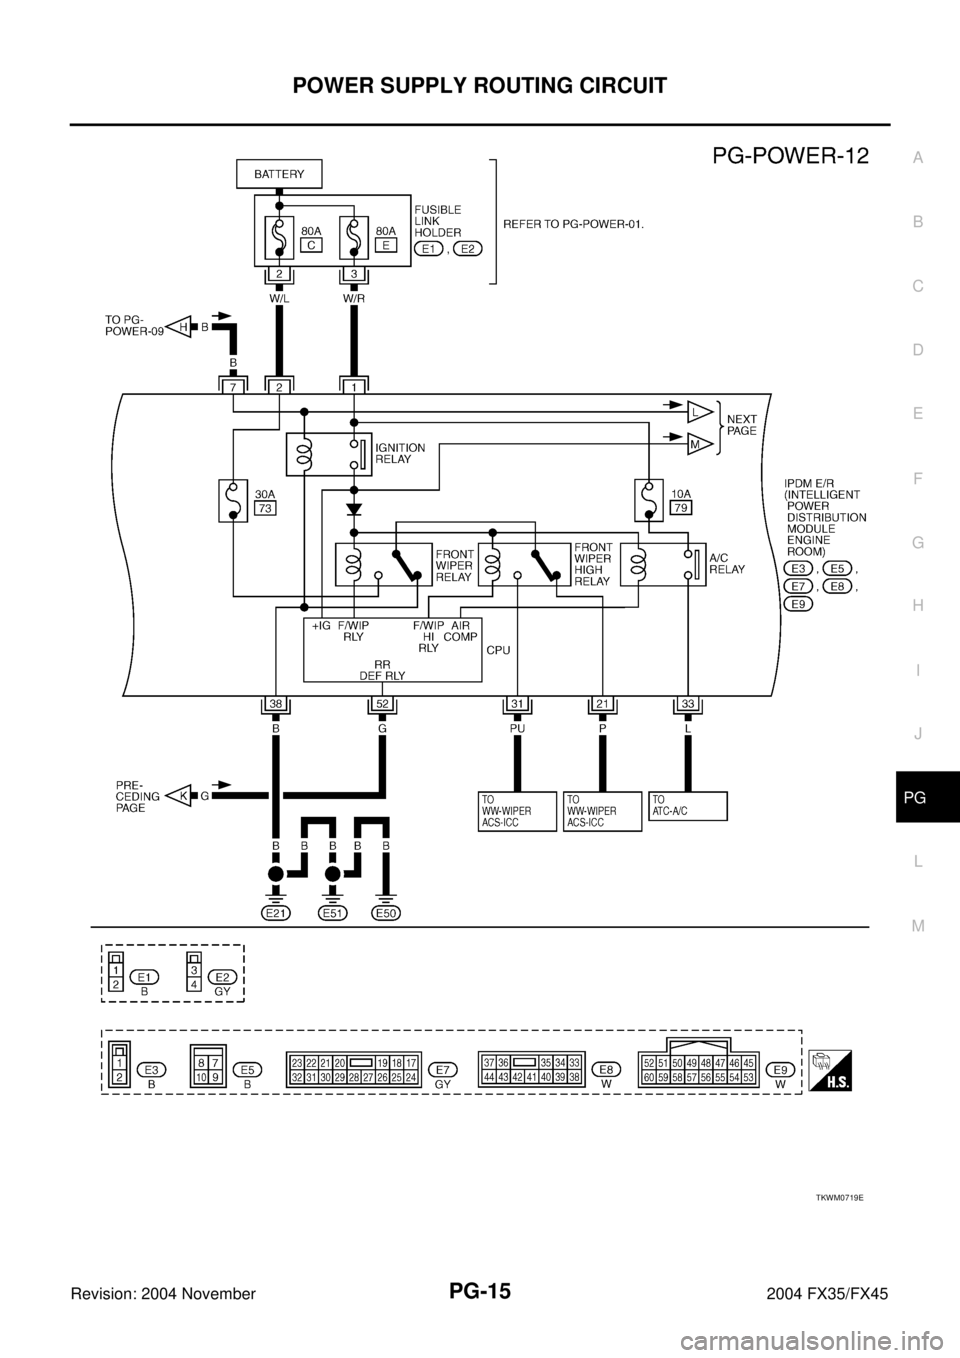 INFINITI FX35 2004  Service Manual POWER SUPPLY ROUTING CIRCUIT
PG-15
C
D
E
F
G
H
I
J
L
MA
B
PG
Revision: 2004 November 2004 FX35/FX45
TKWM0719E 